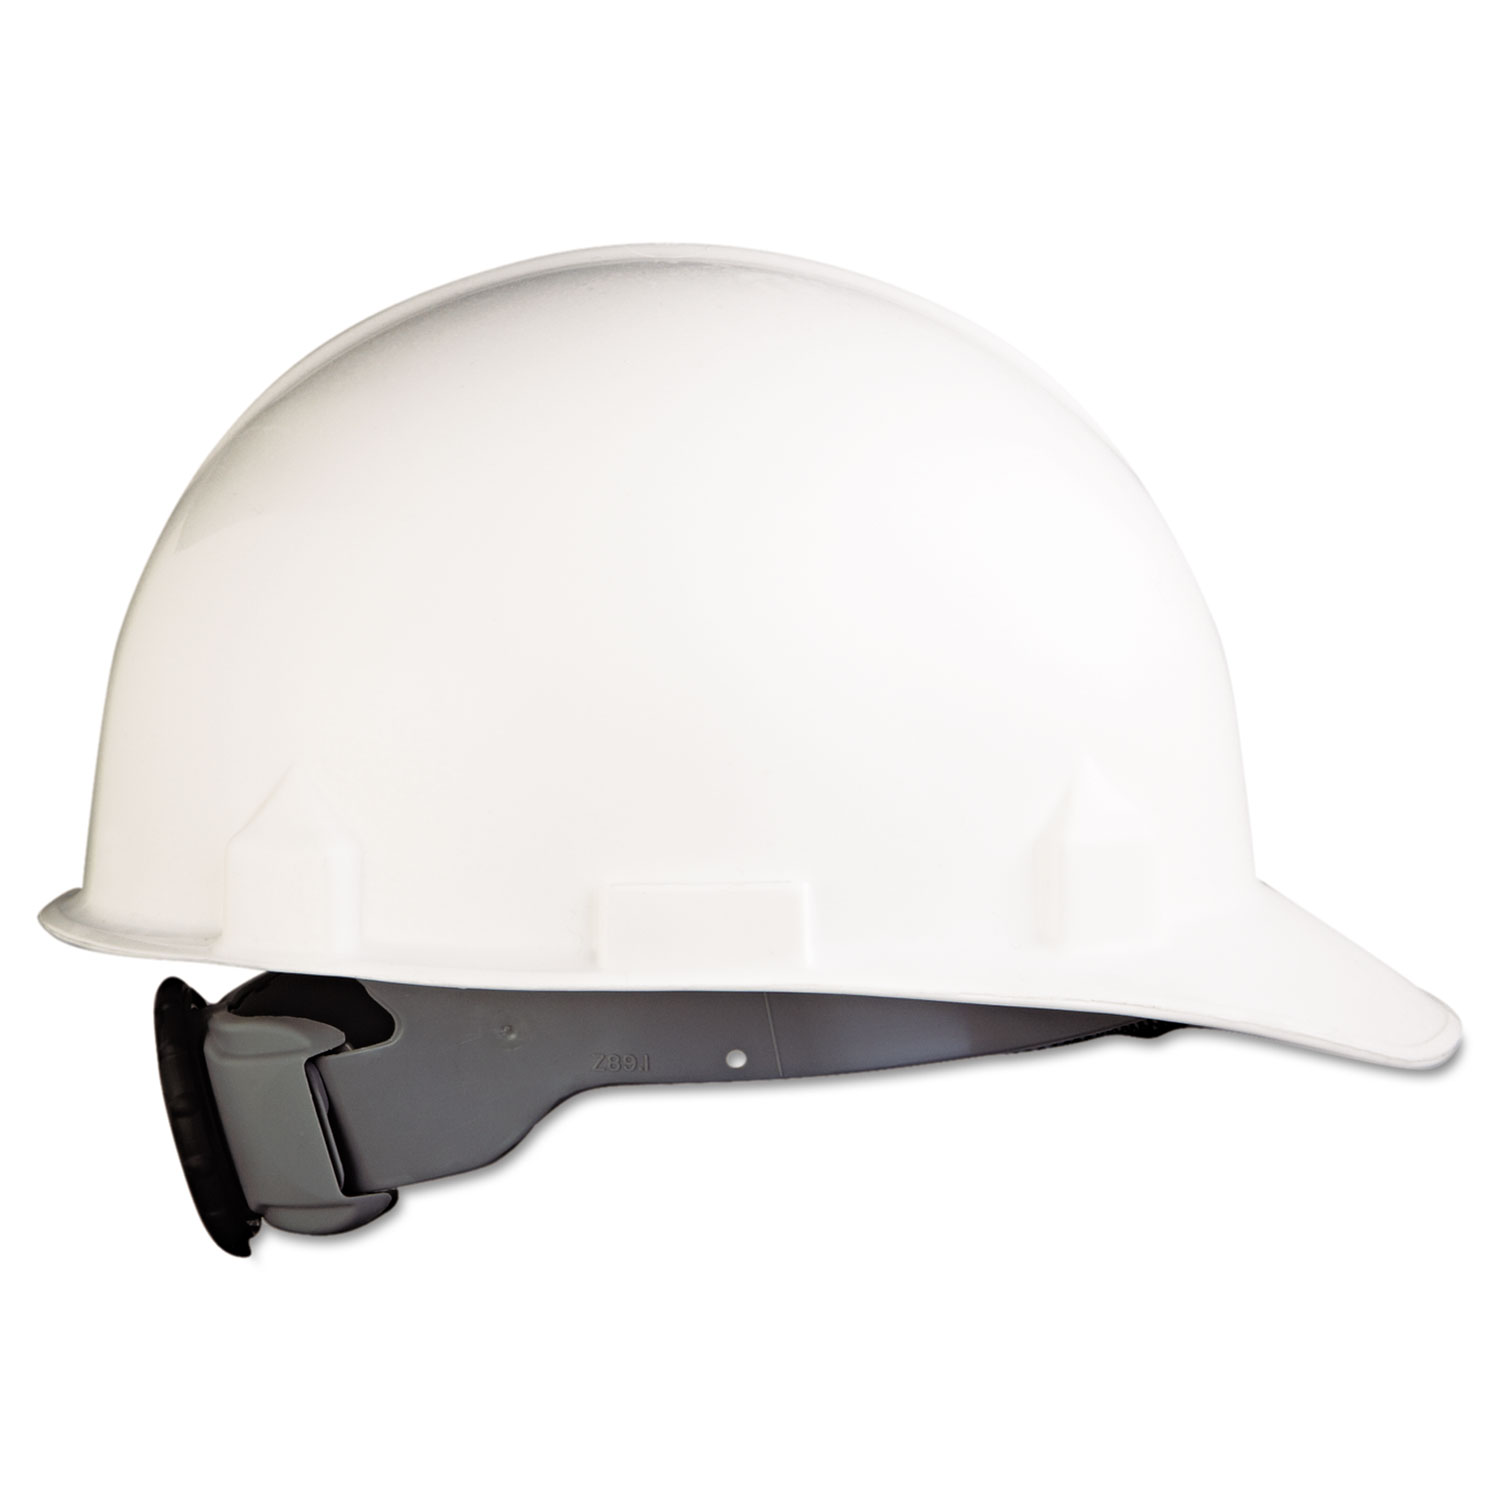 SC-6 Head Protection w/4-Point Suspension, White